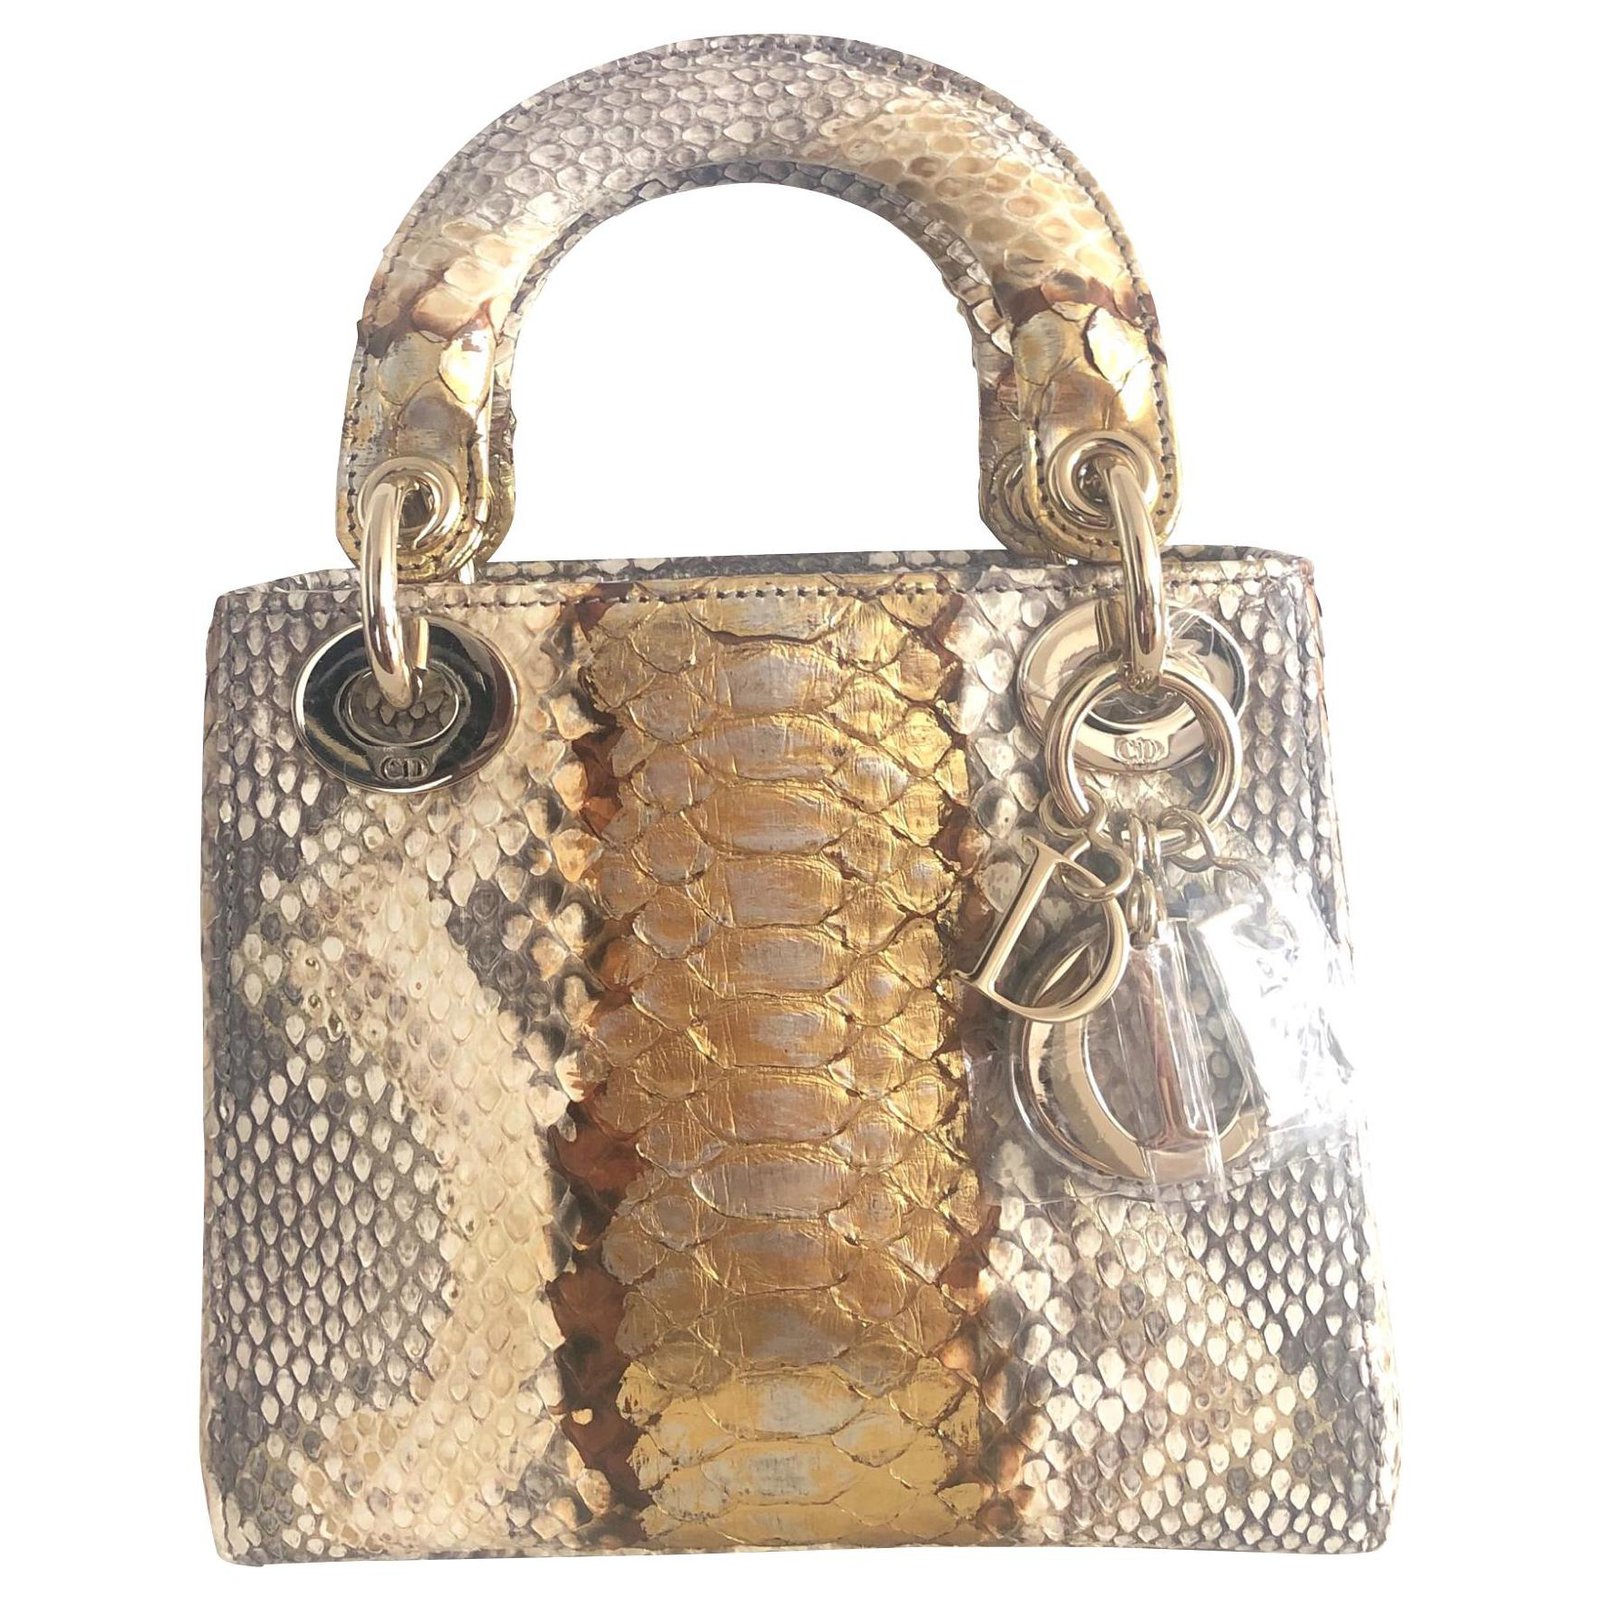 dior gold handbag